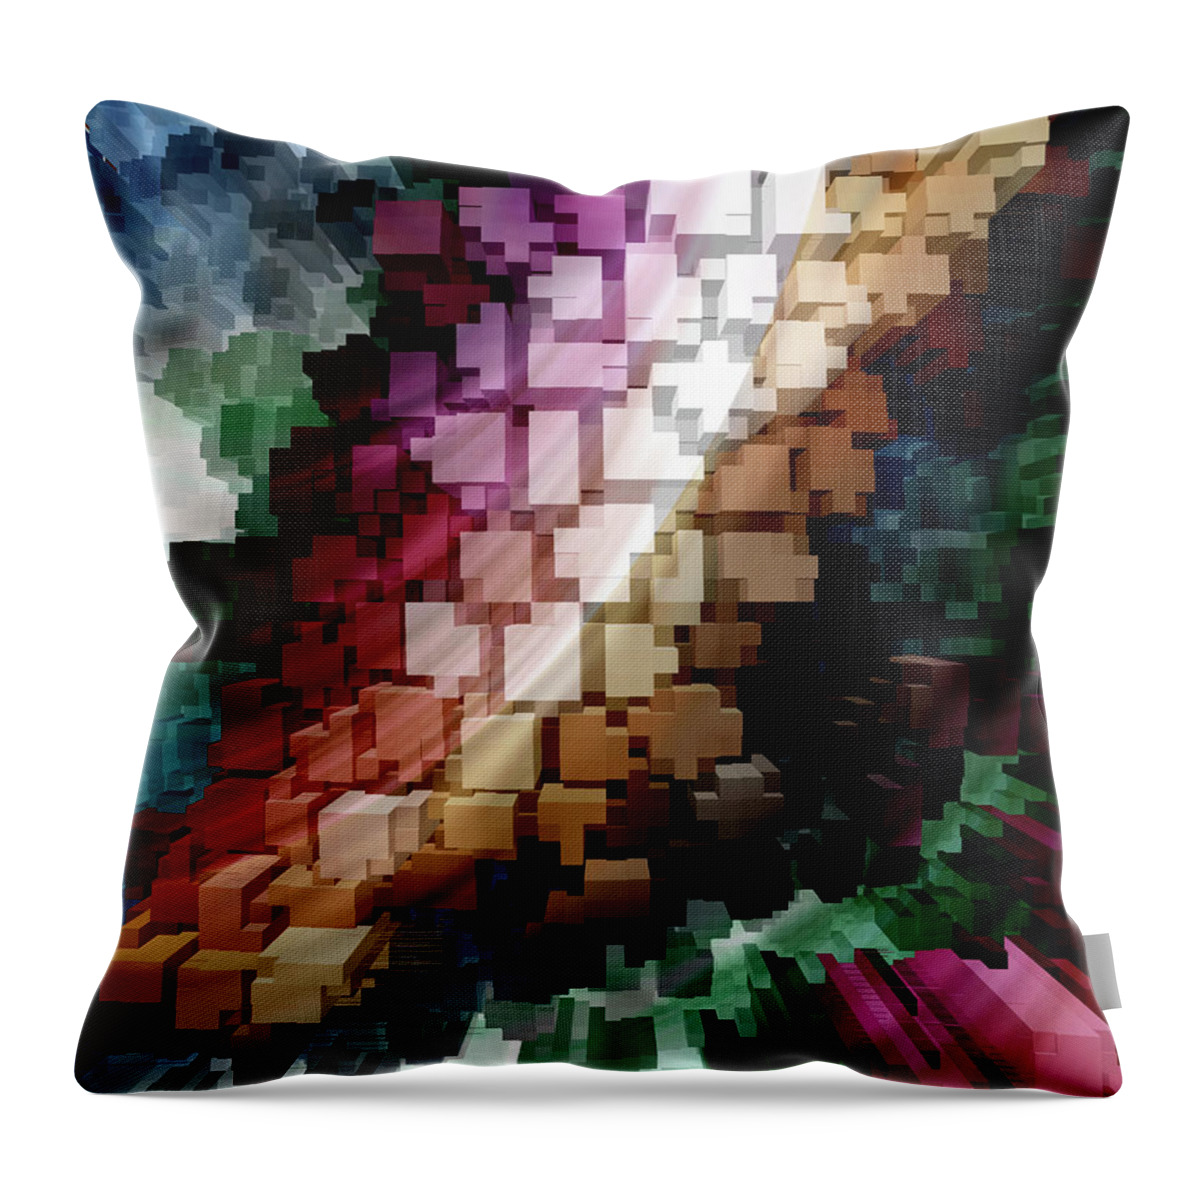 Abstract Throw Pillow featuring the digital art Cube Centric Dark Wind by Rolando Burbon